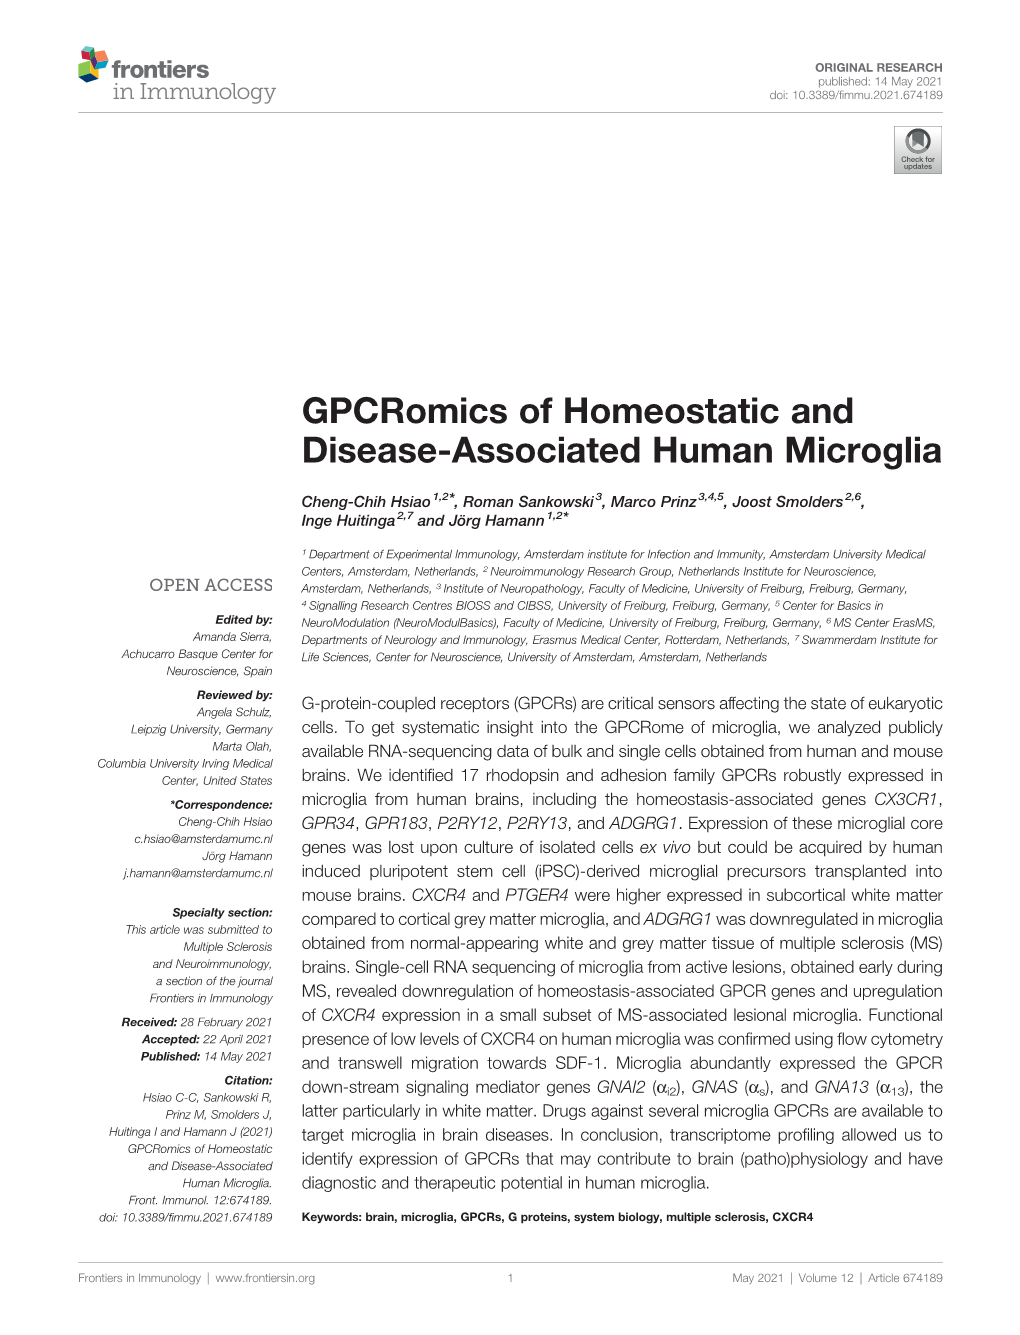 Gpcromics of Homeostatic and Disease-Associated Human Microglia